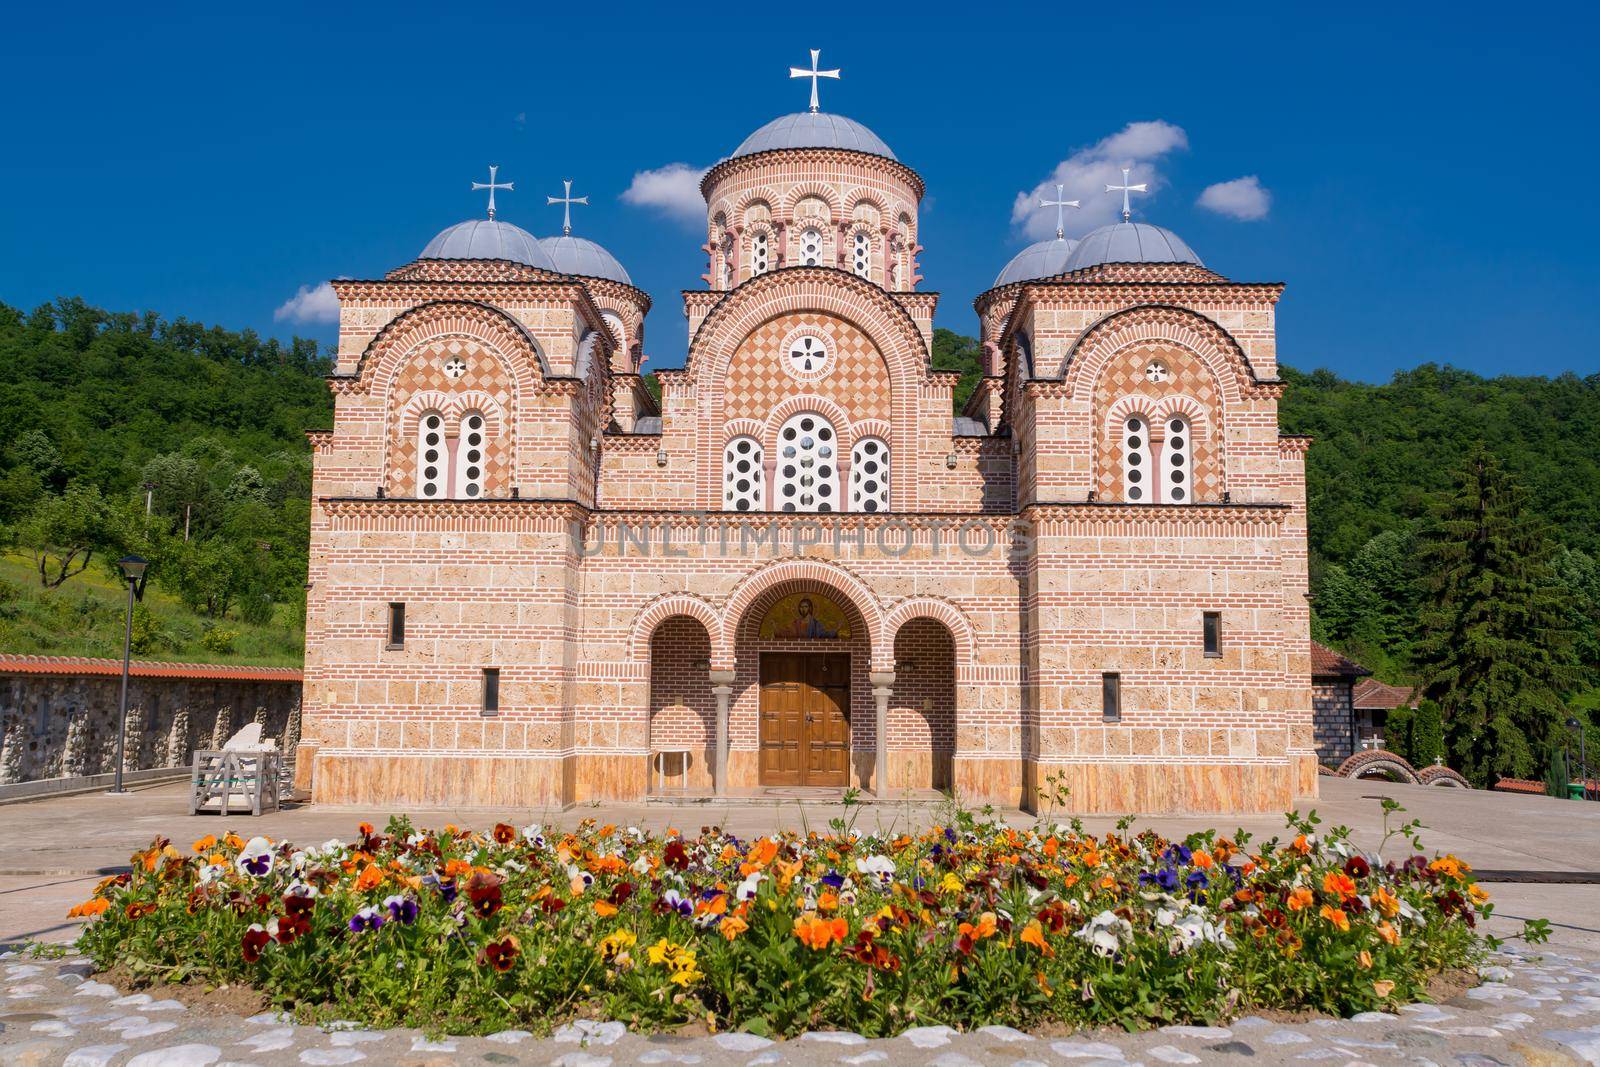 Celije - famous monasteri near Valjevo, West Serbia by adamr